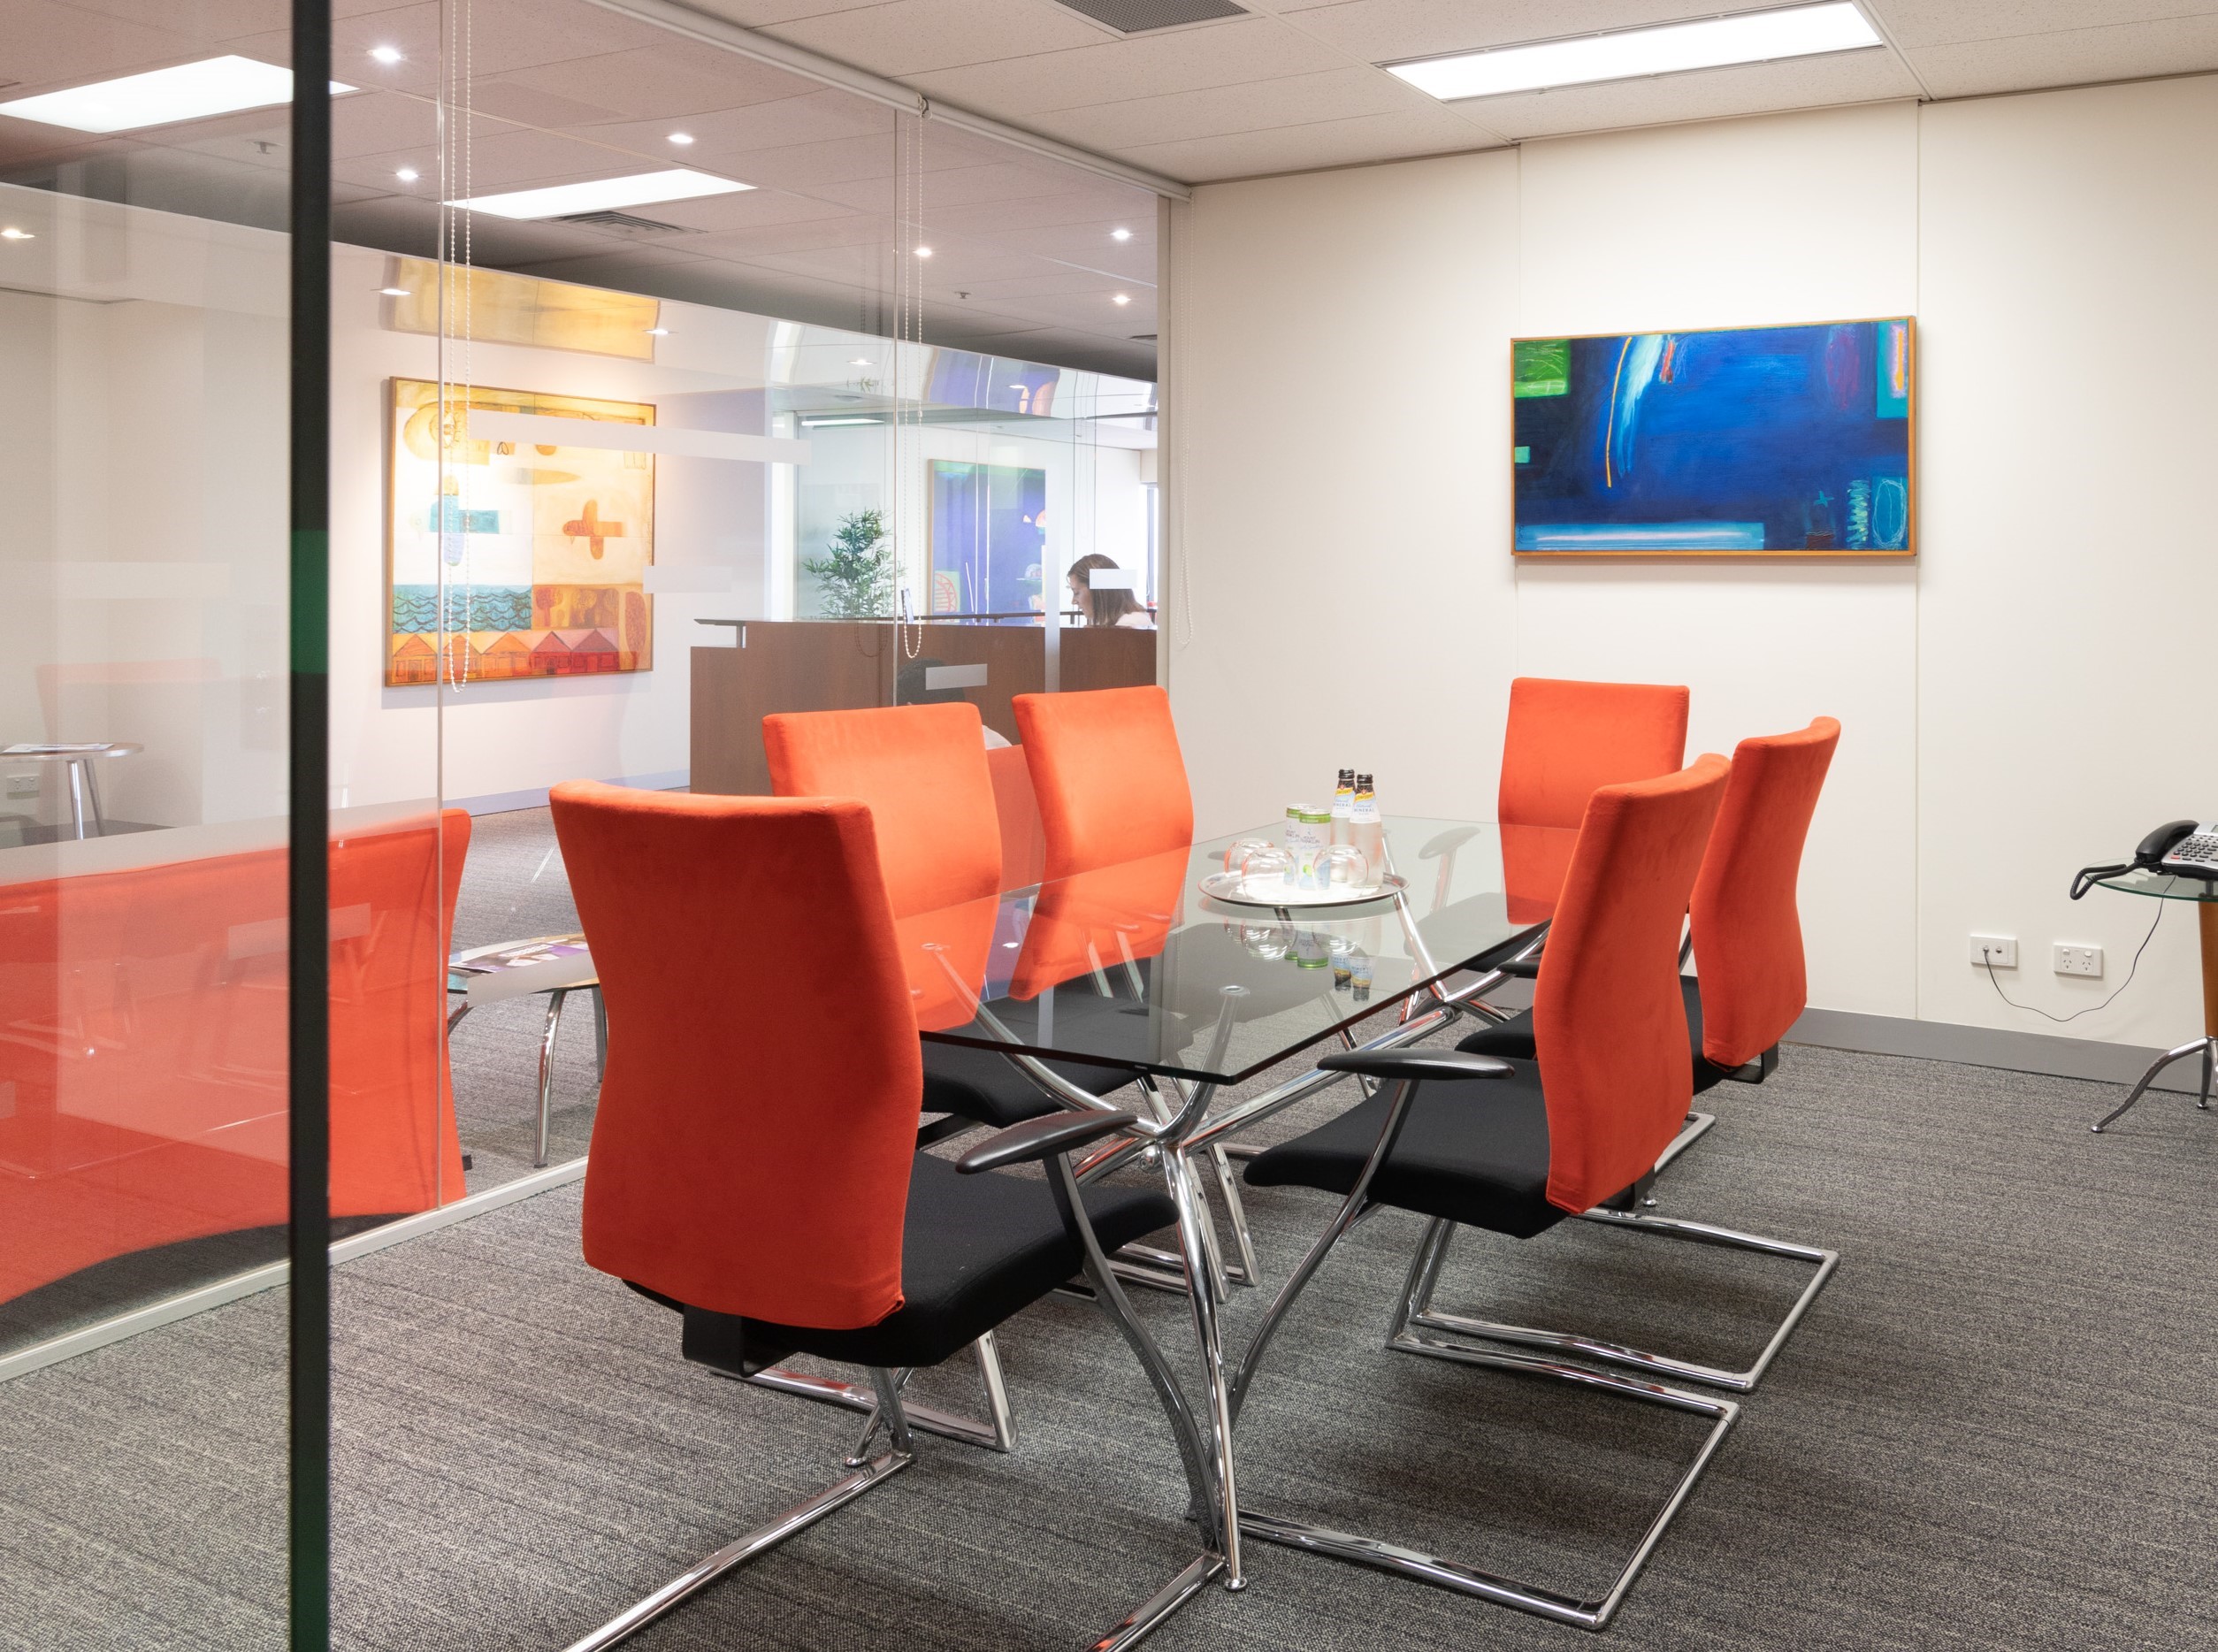 Meeting Rooms at BSPACE Brisbane, 300 Queen St, Brisbane City, QLD, 4000, Australia